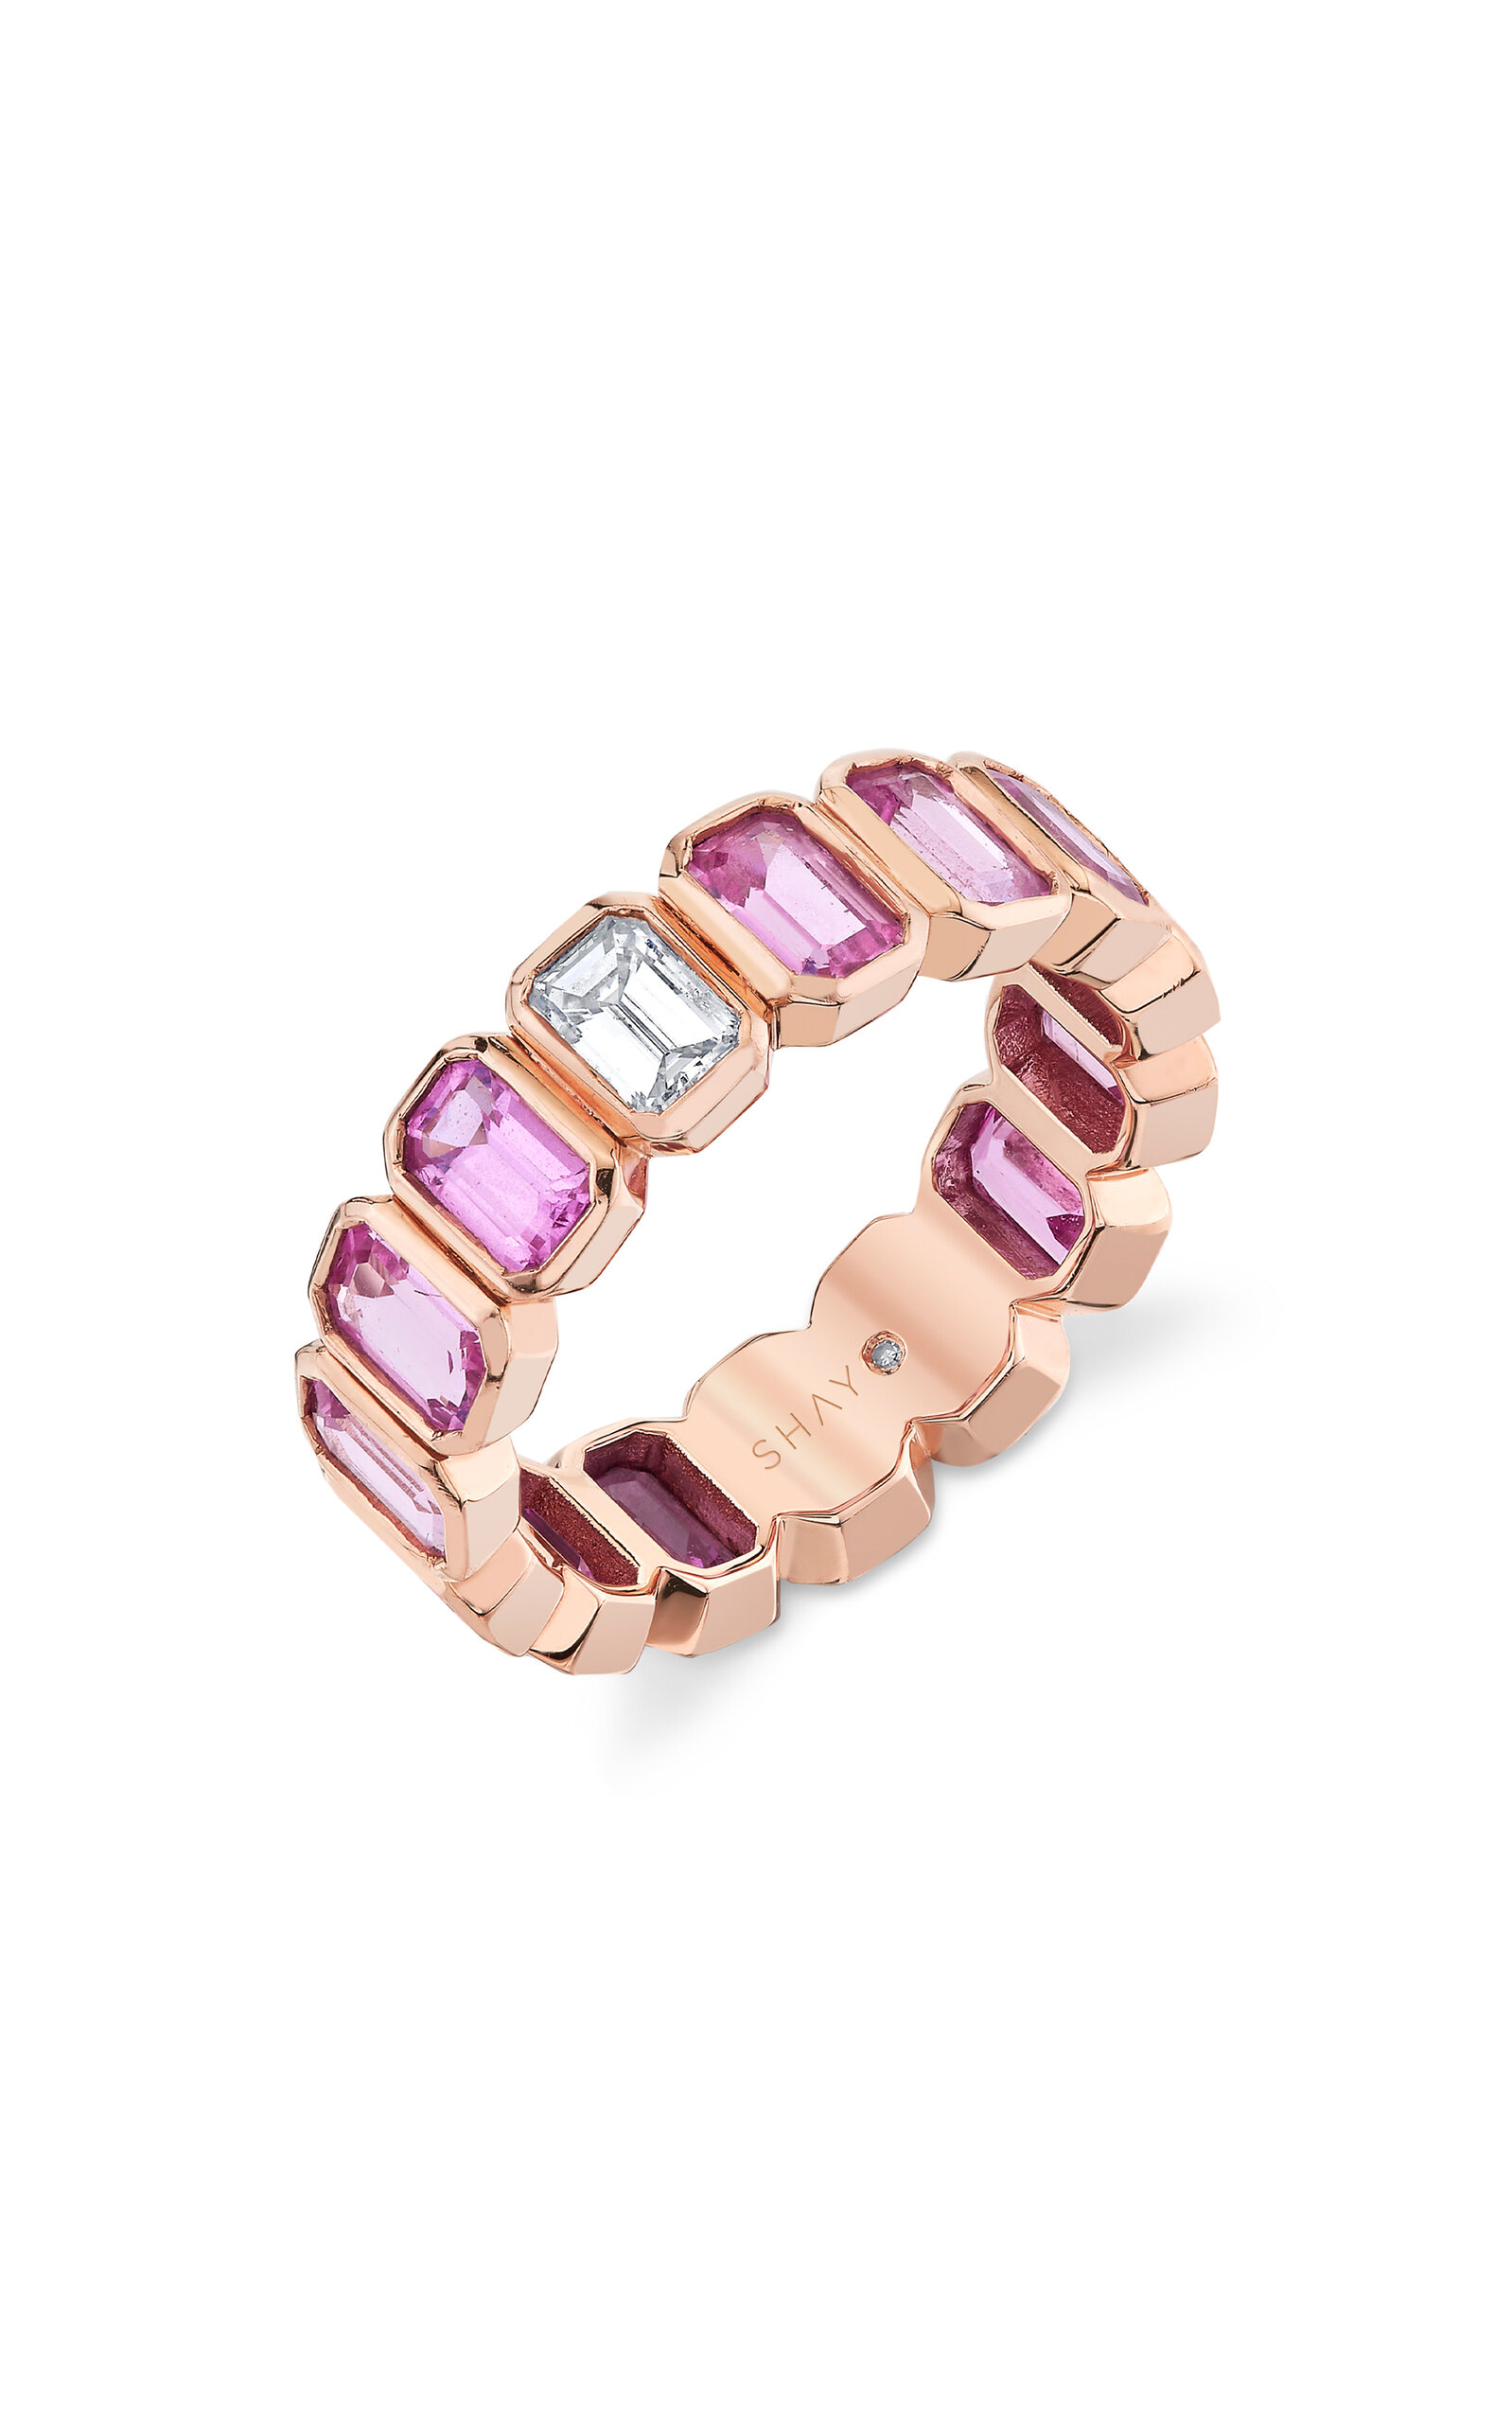 SHAY - 18K Rose Gold Pink Sapphire & Diamond Bezel Eternity Band Ring - Pink - US 7.5 - Moda Operandi - Gifts For Her